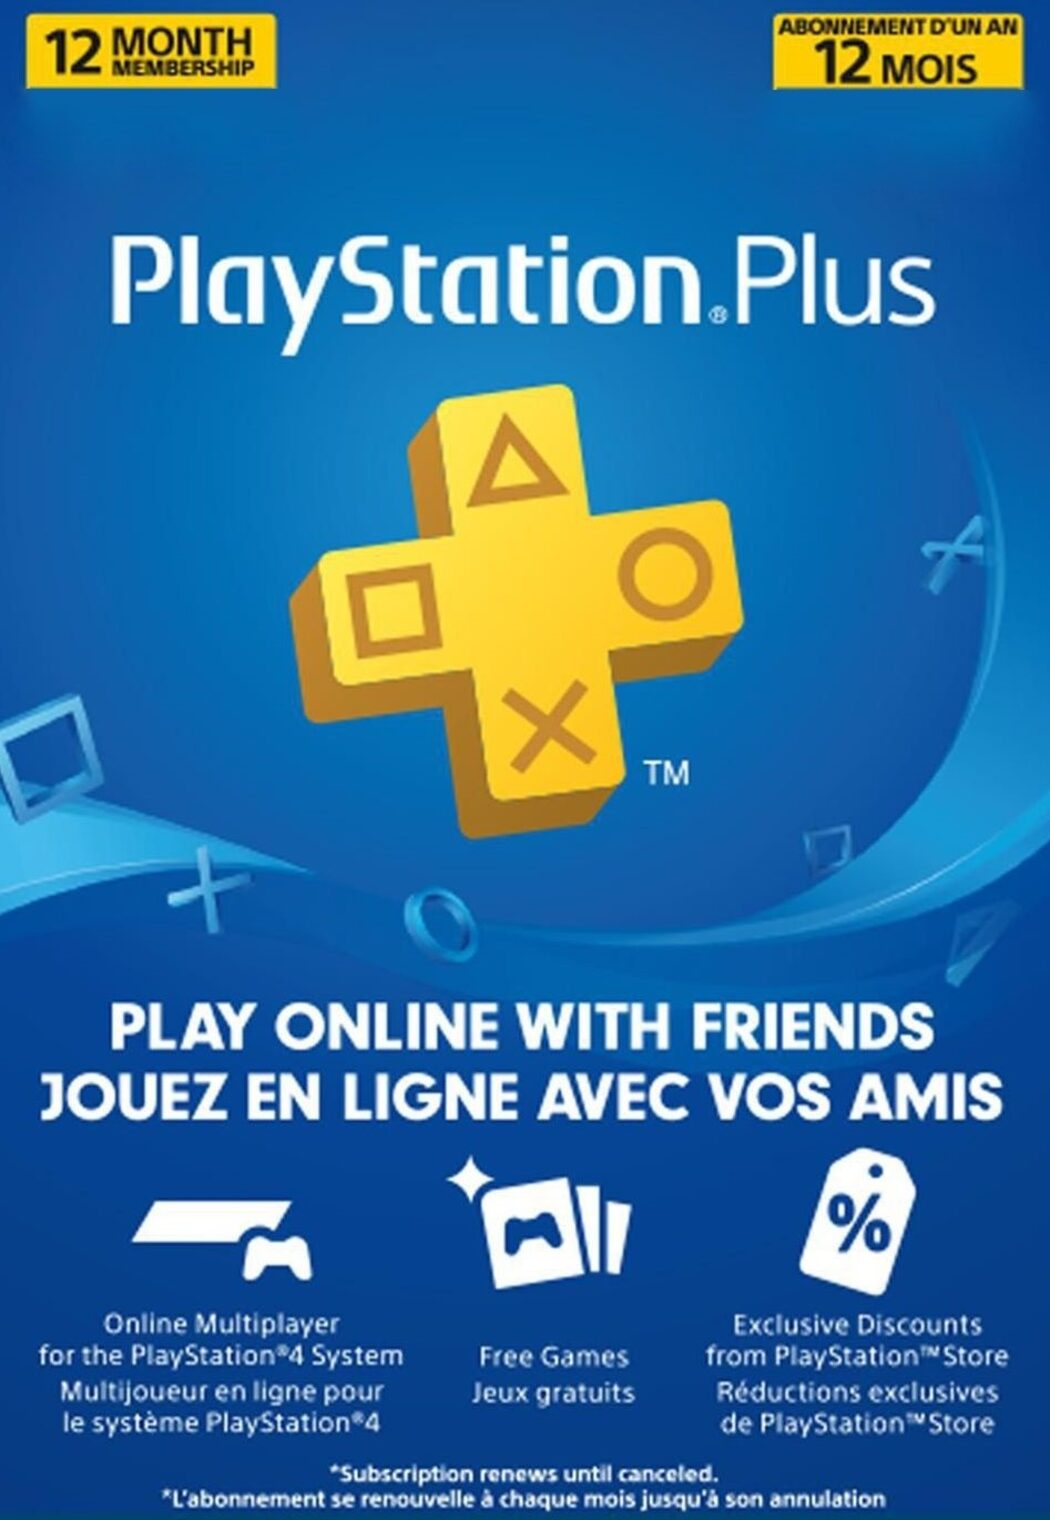 PlayStation Plus Essential 3 months PSN key UNITED STATES